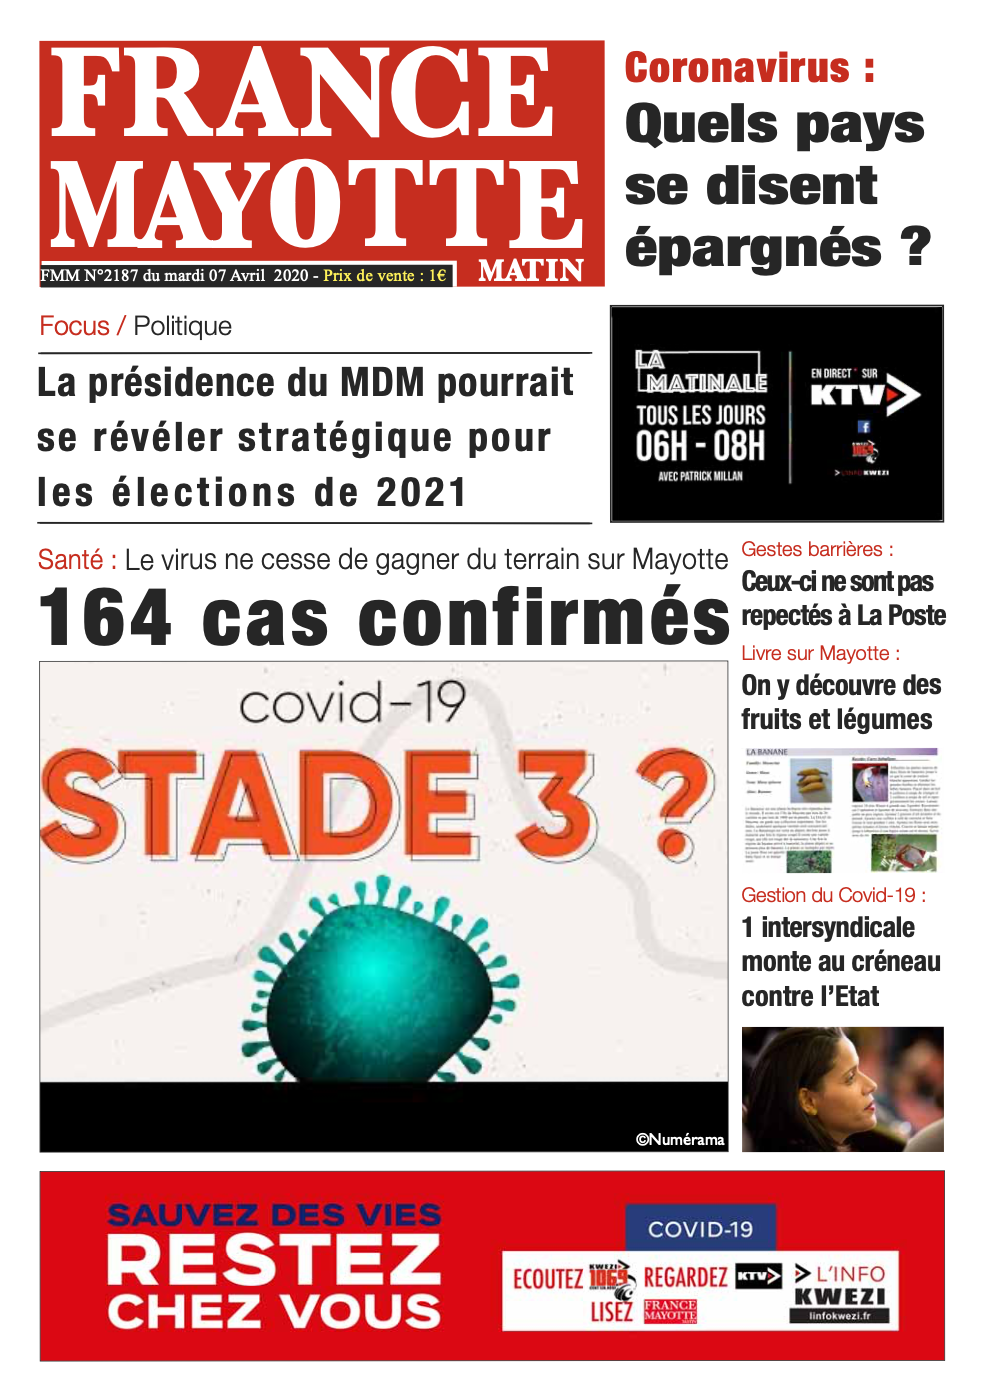 France Mayotte Mardi 7 avril 2020